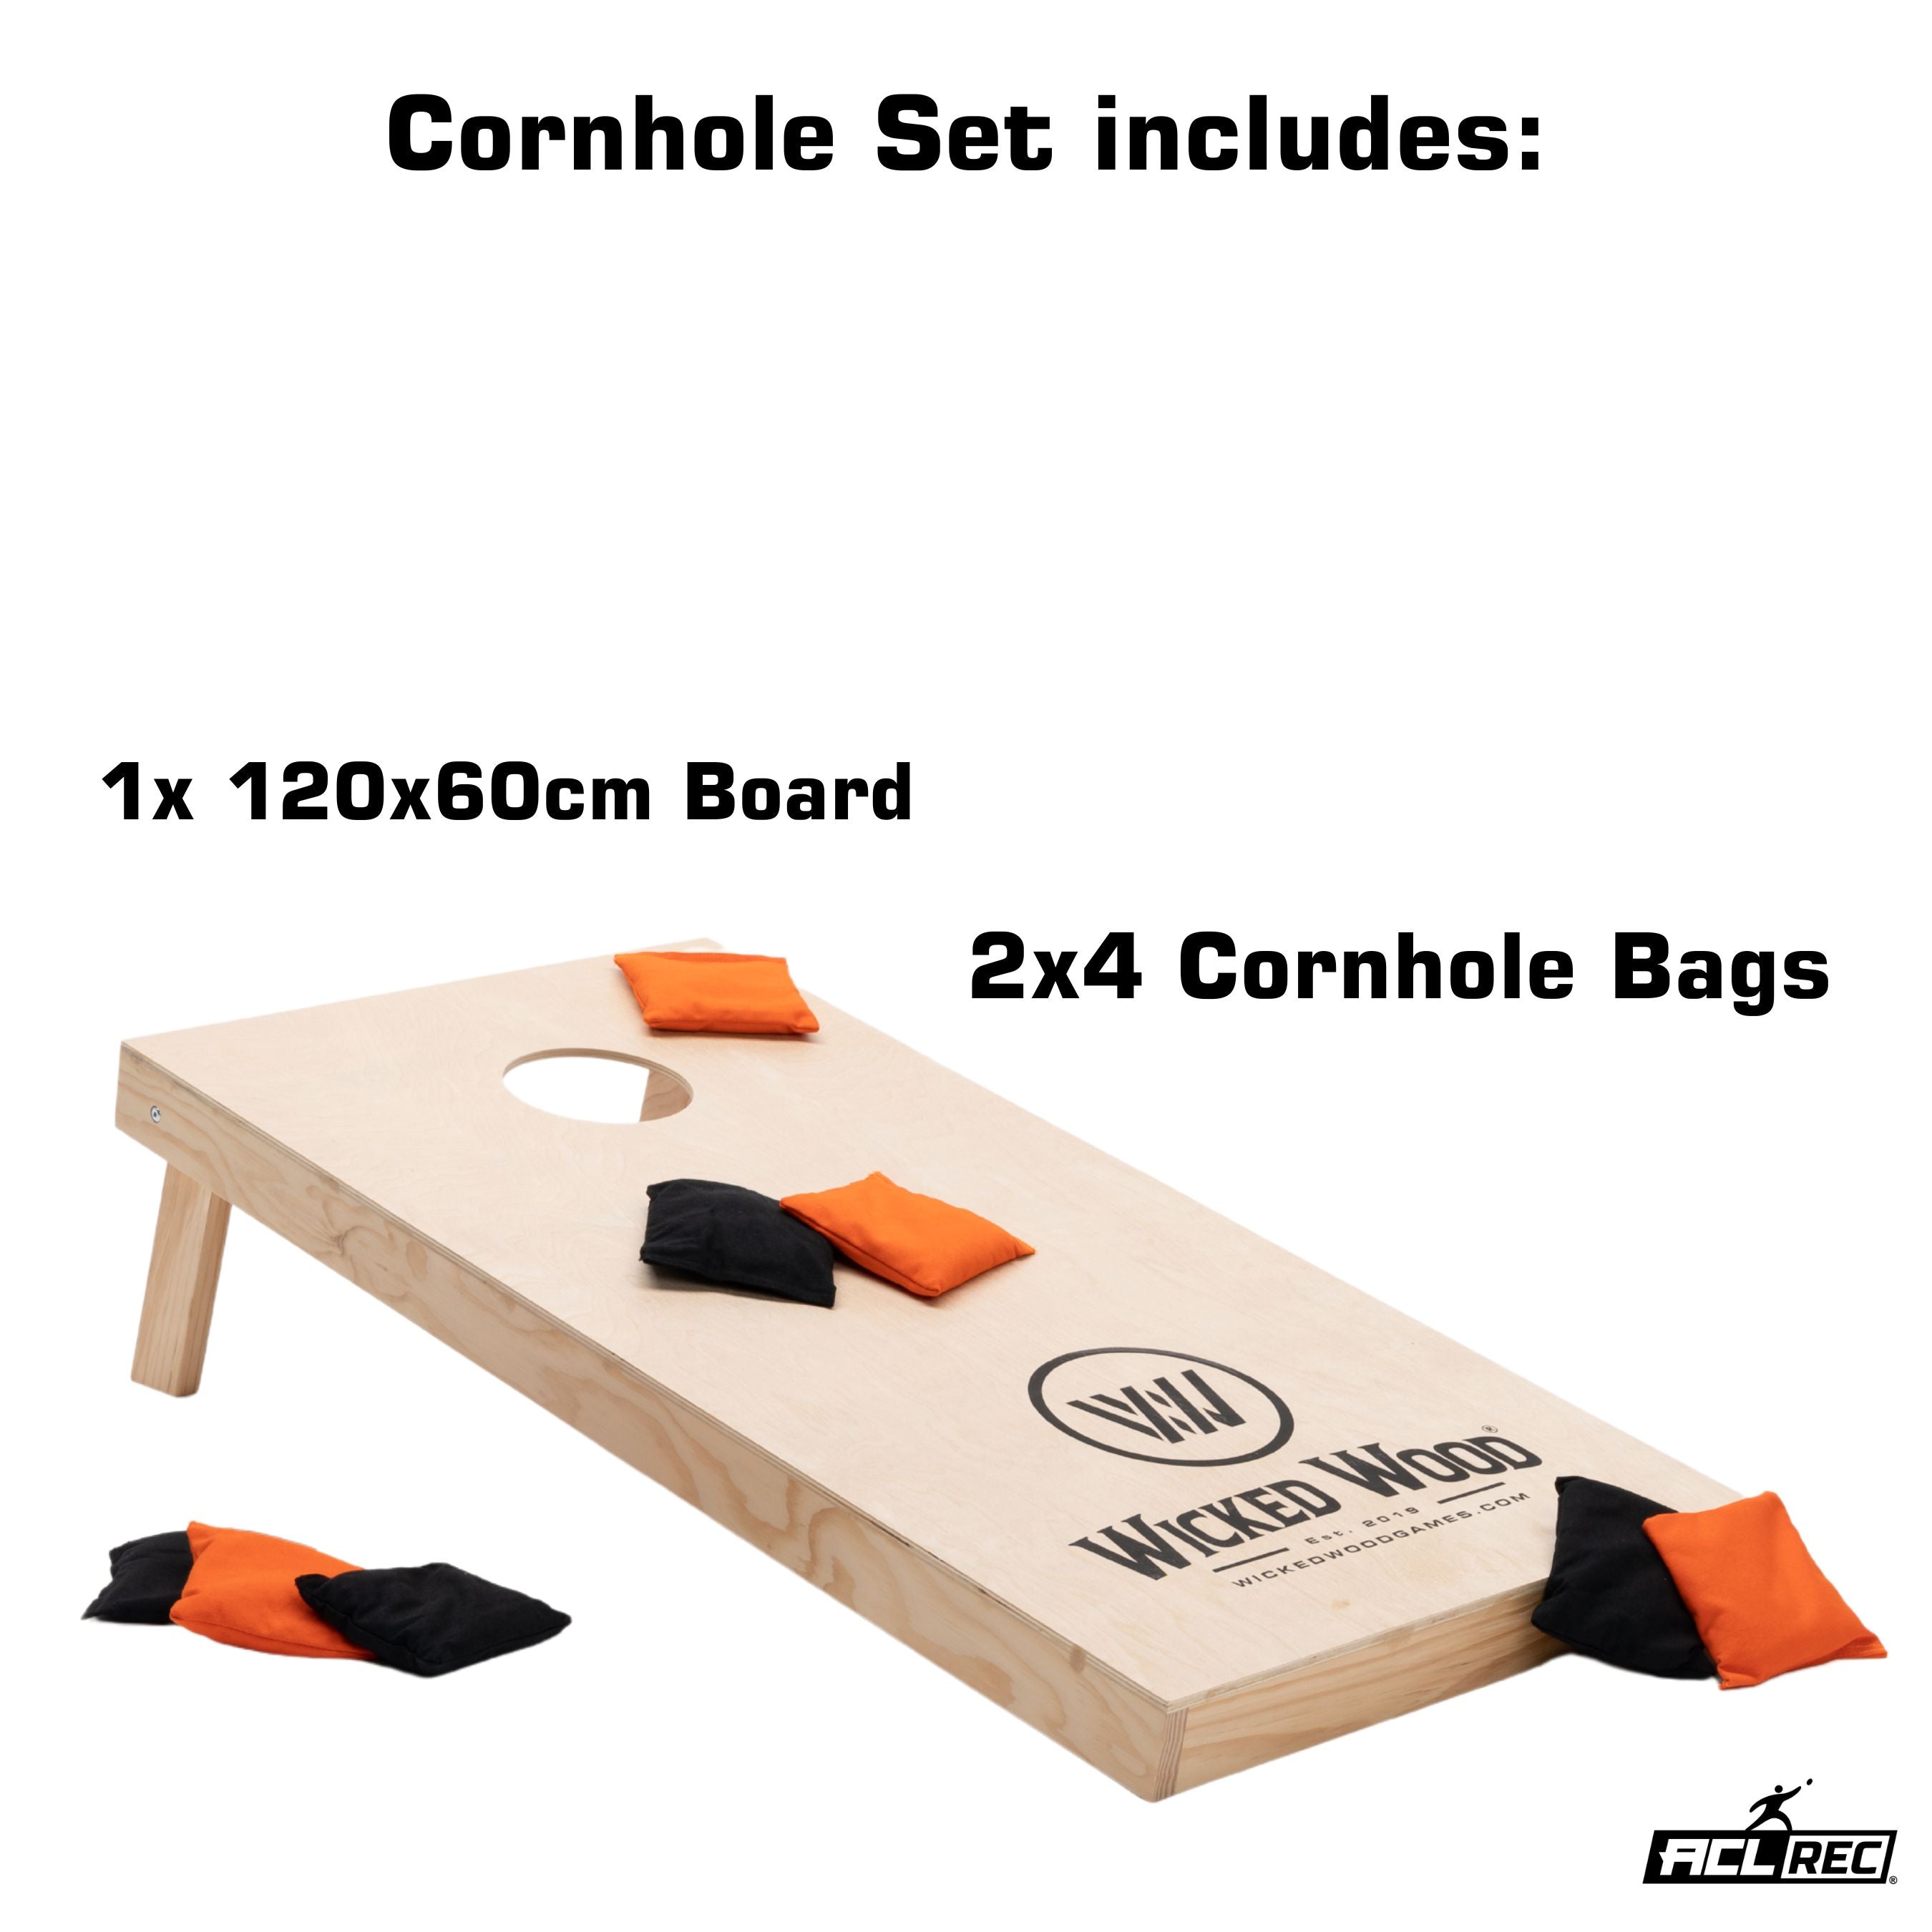 Cornhole Starting Kit - 120x60 - 1x Board / 2x4 Bags